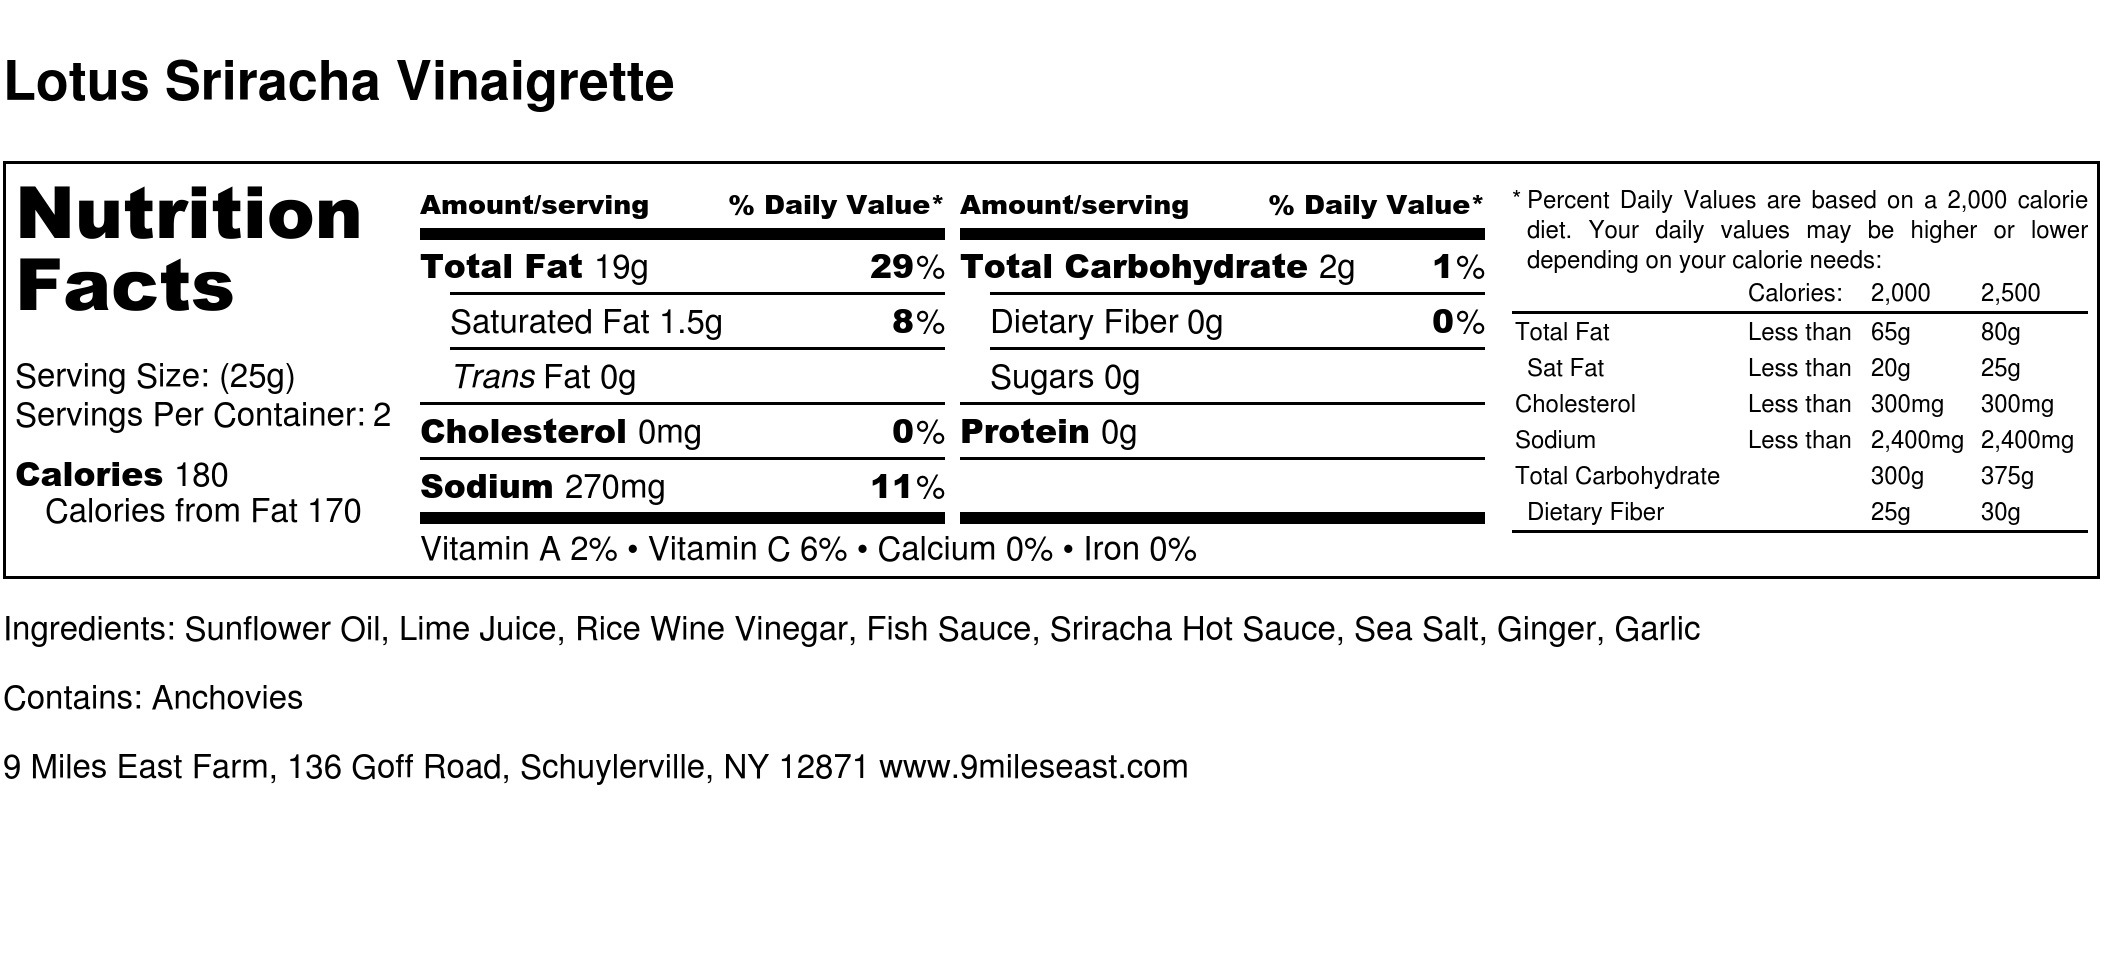 Lotus Sriracha Vinaigrette - Nutrition Label.jpg